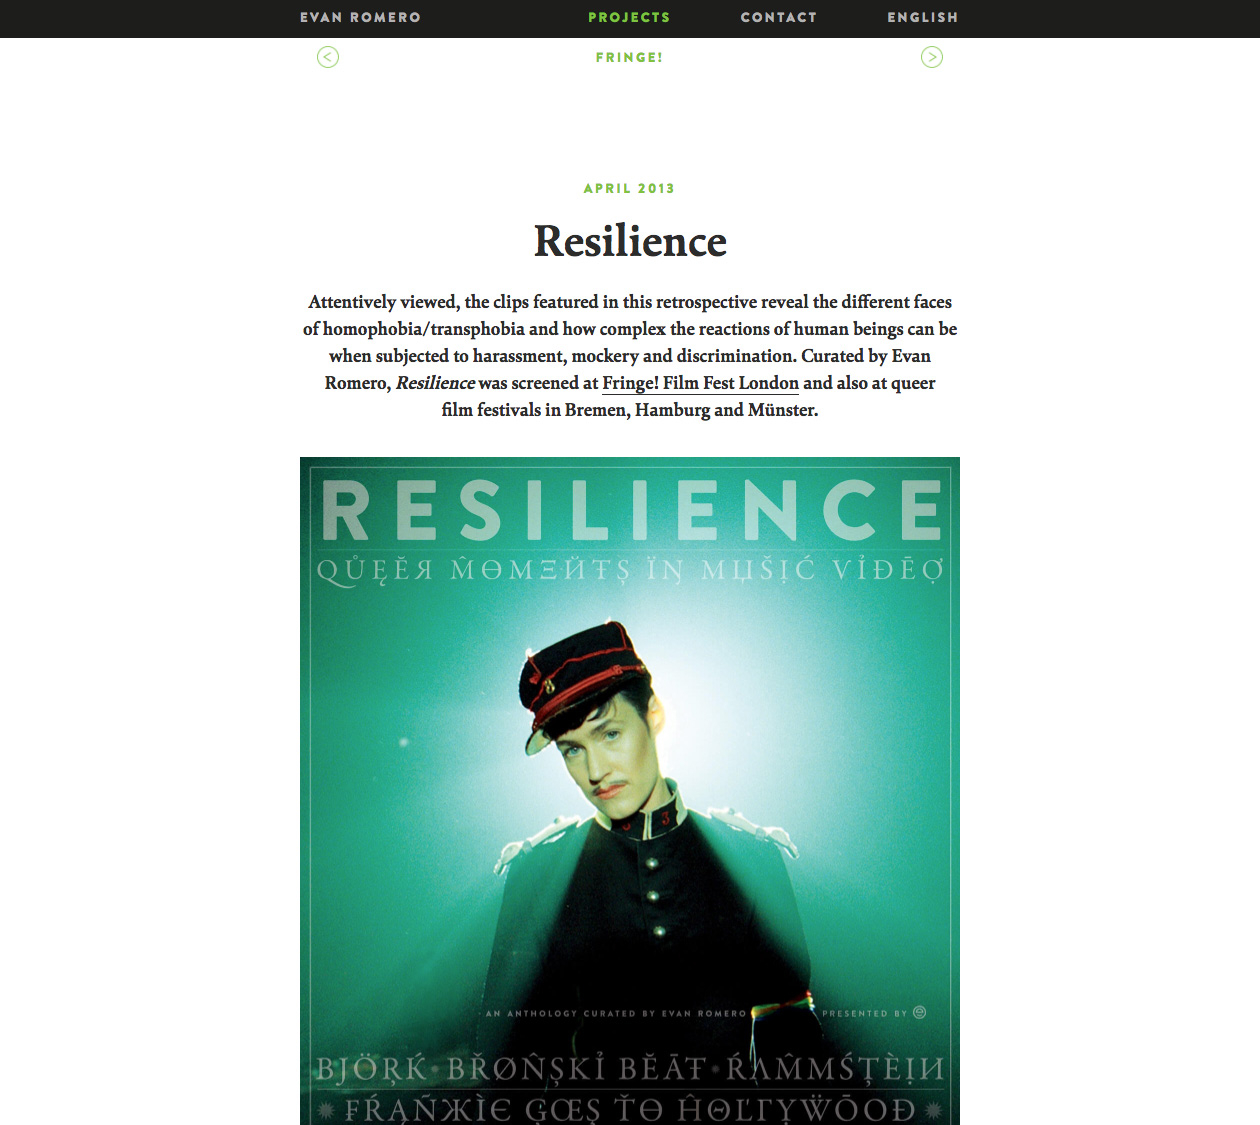 Website von Evan Romero, Projekt Resilience